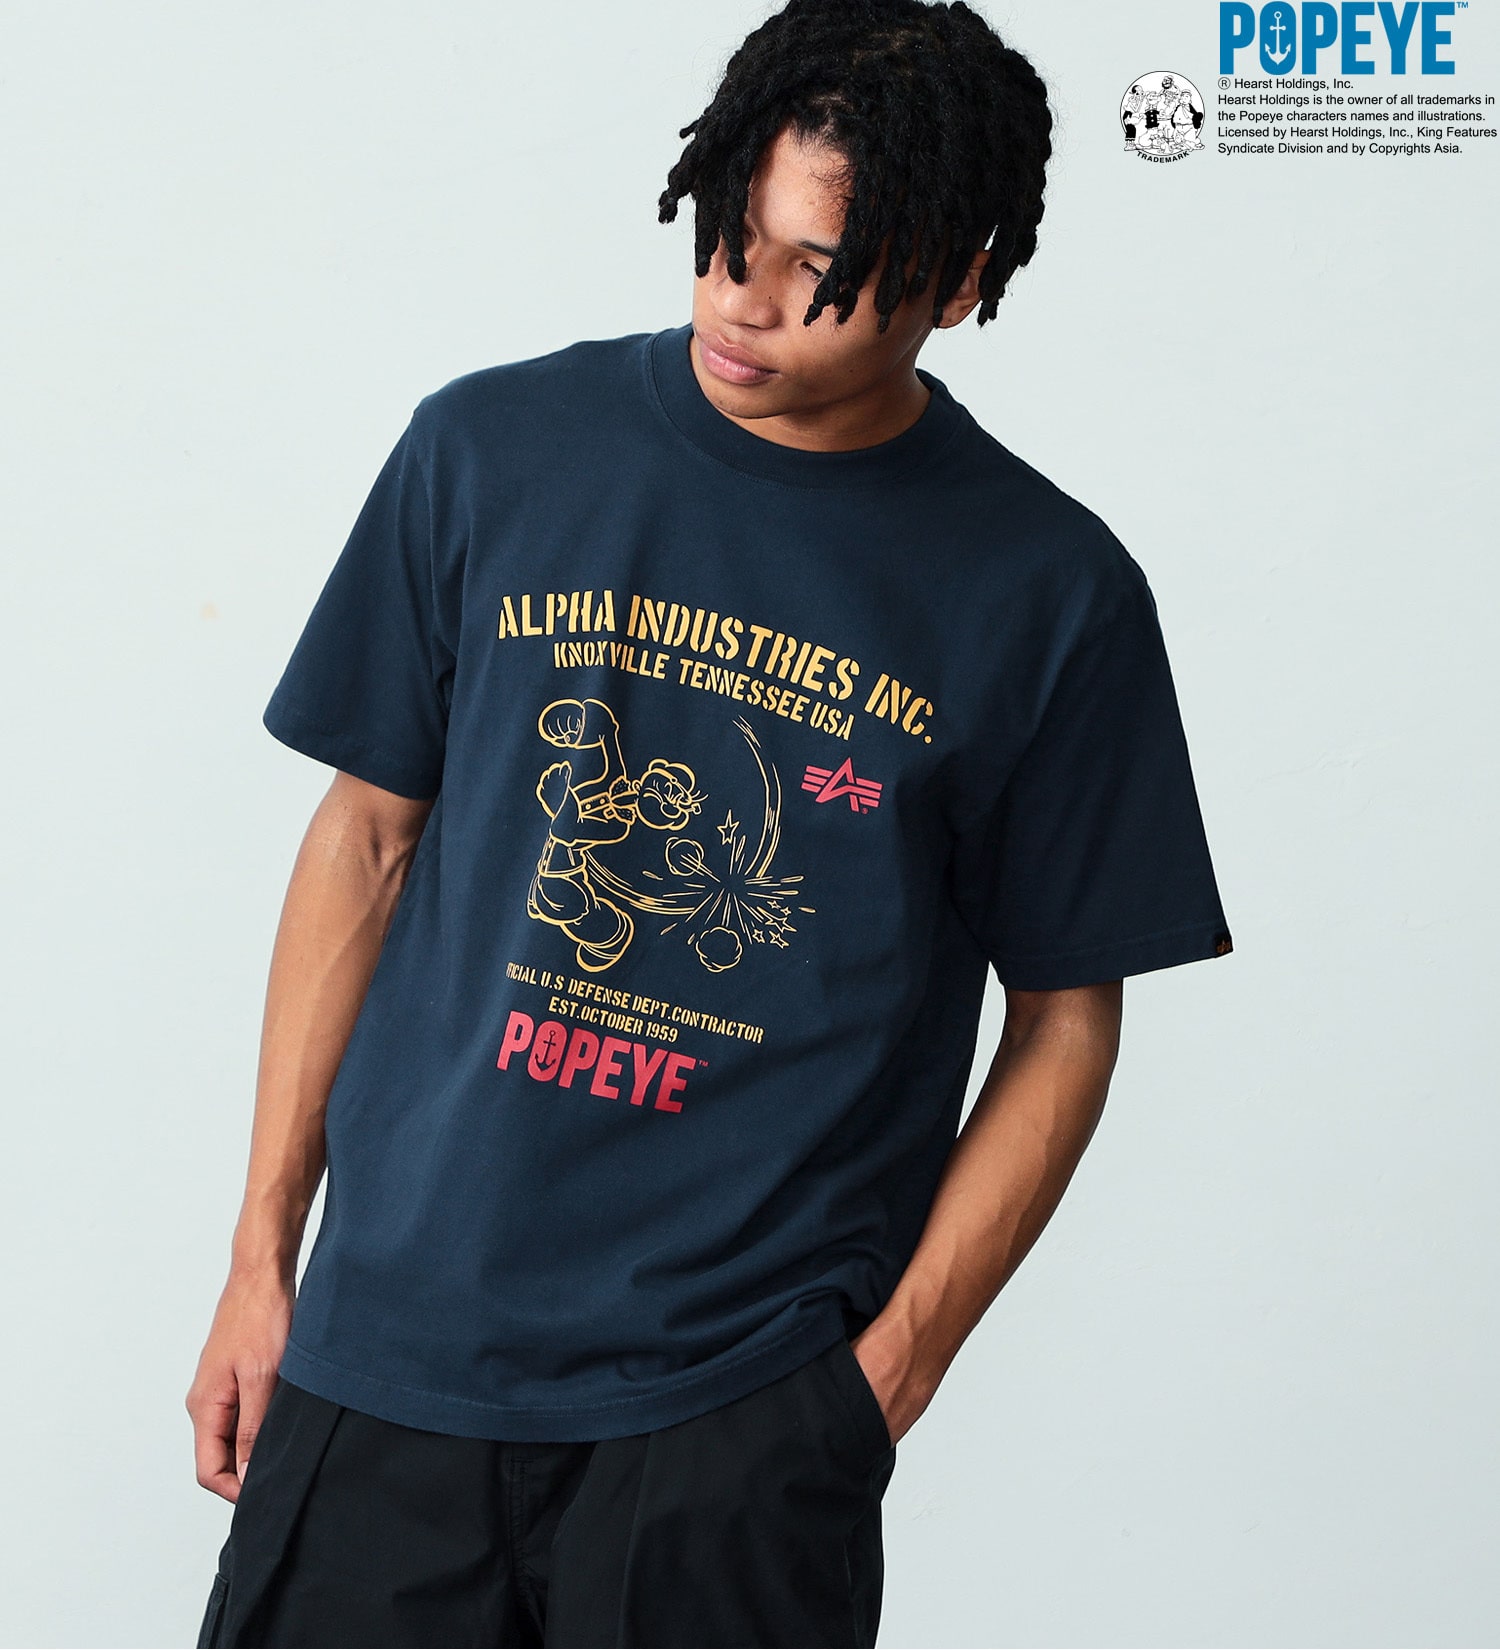 ALPHA(アルファ)の【おまとめ割対象】POPEYE(TM)xALPHA プリントTシャツ(パンチ)|トップス/Tシャツ/カットソー/メンズ|ネイビー